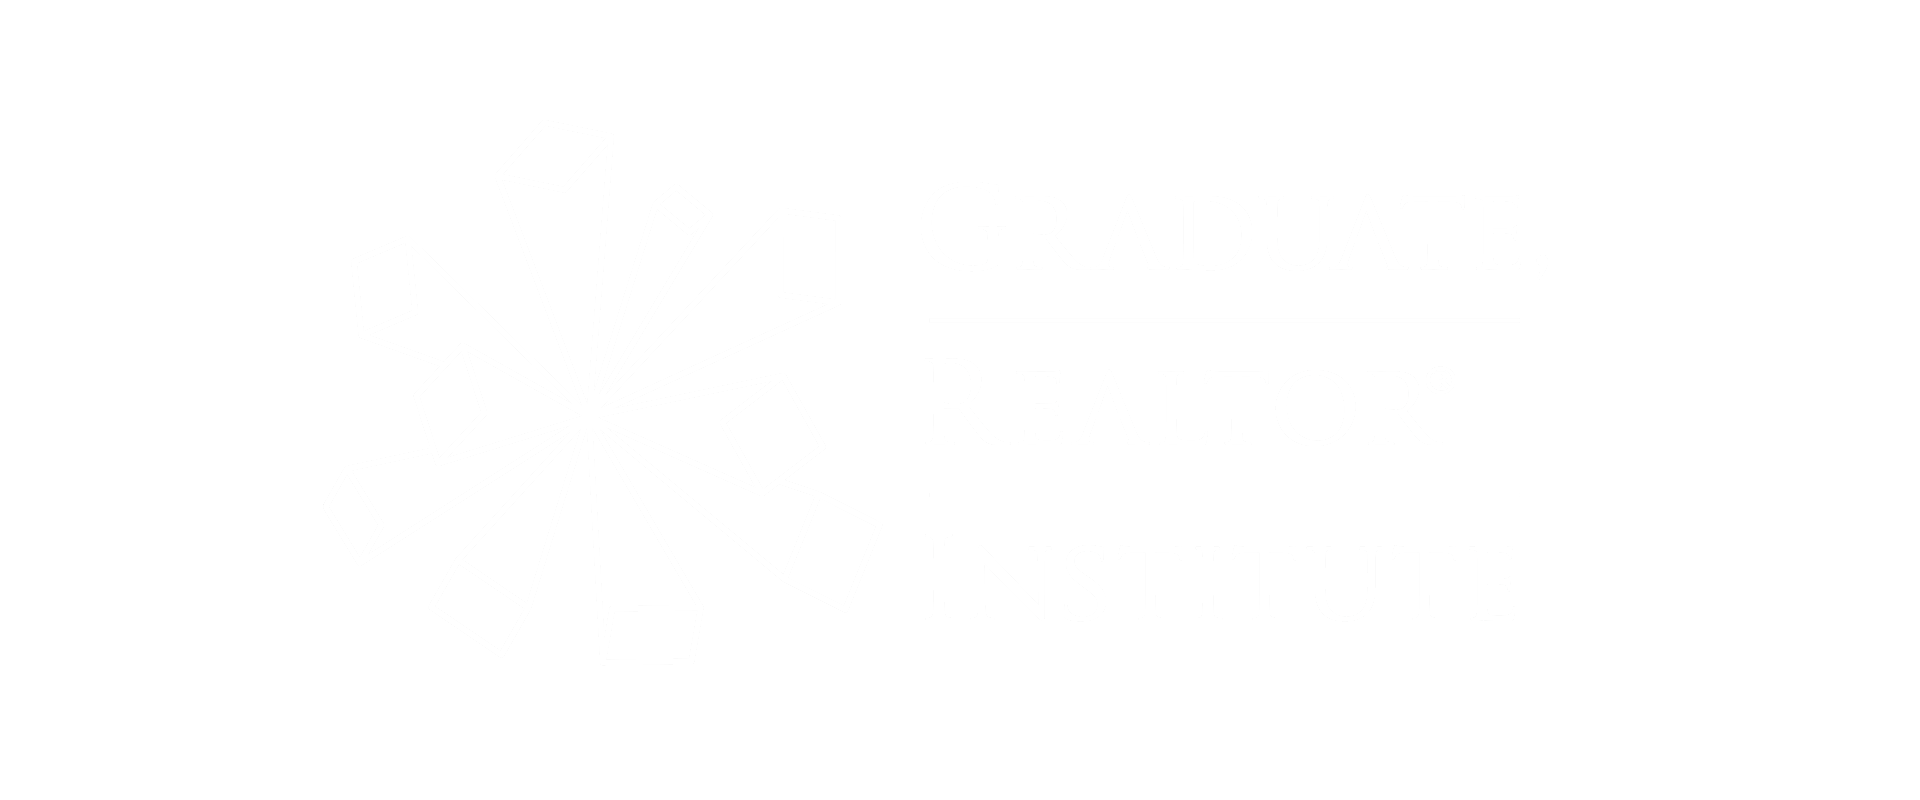 Graduate-Realtor-Institute-Logo.png